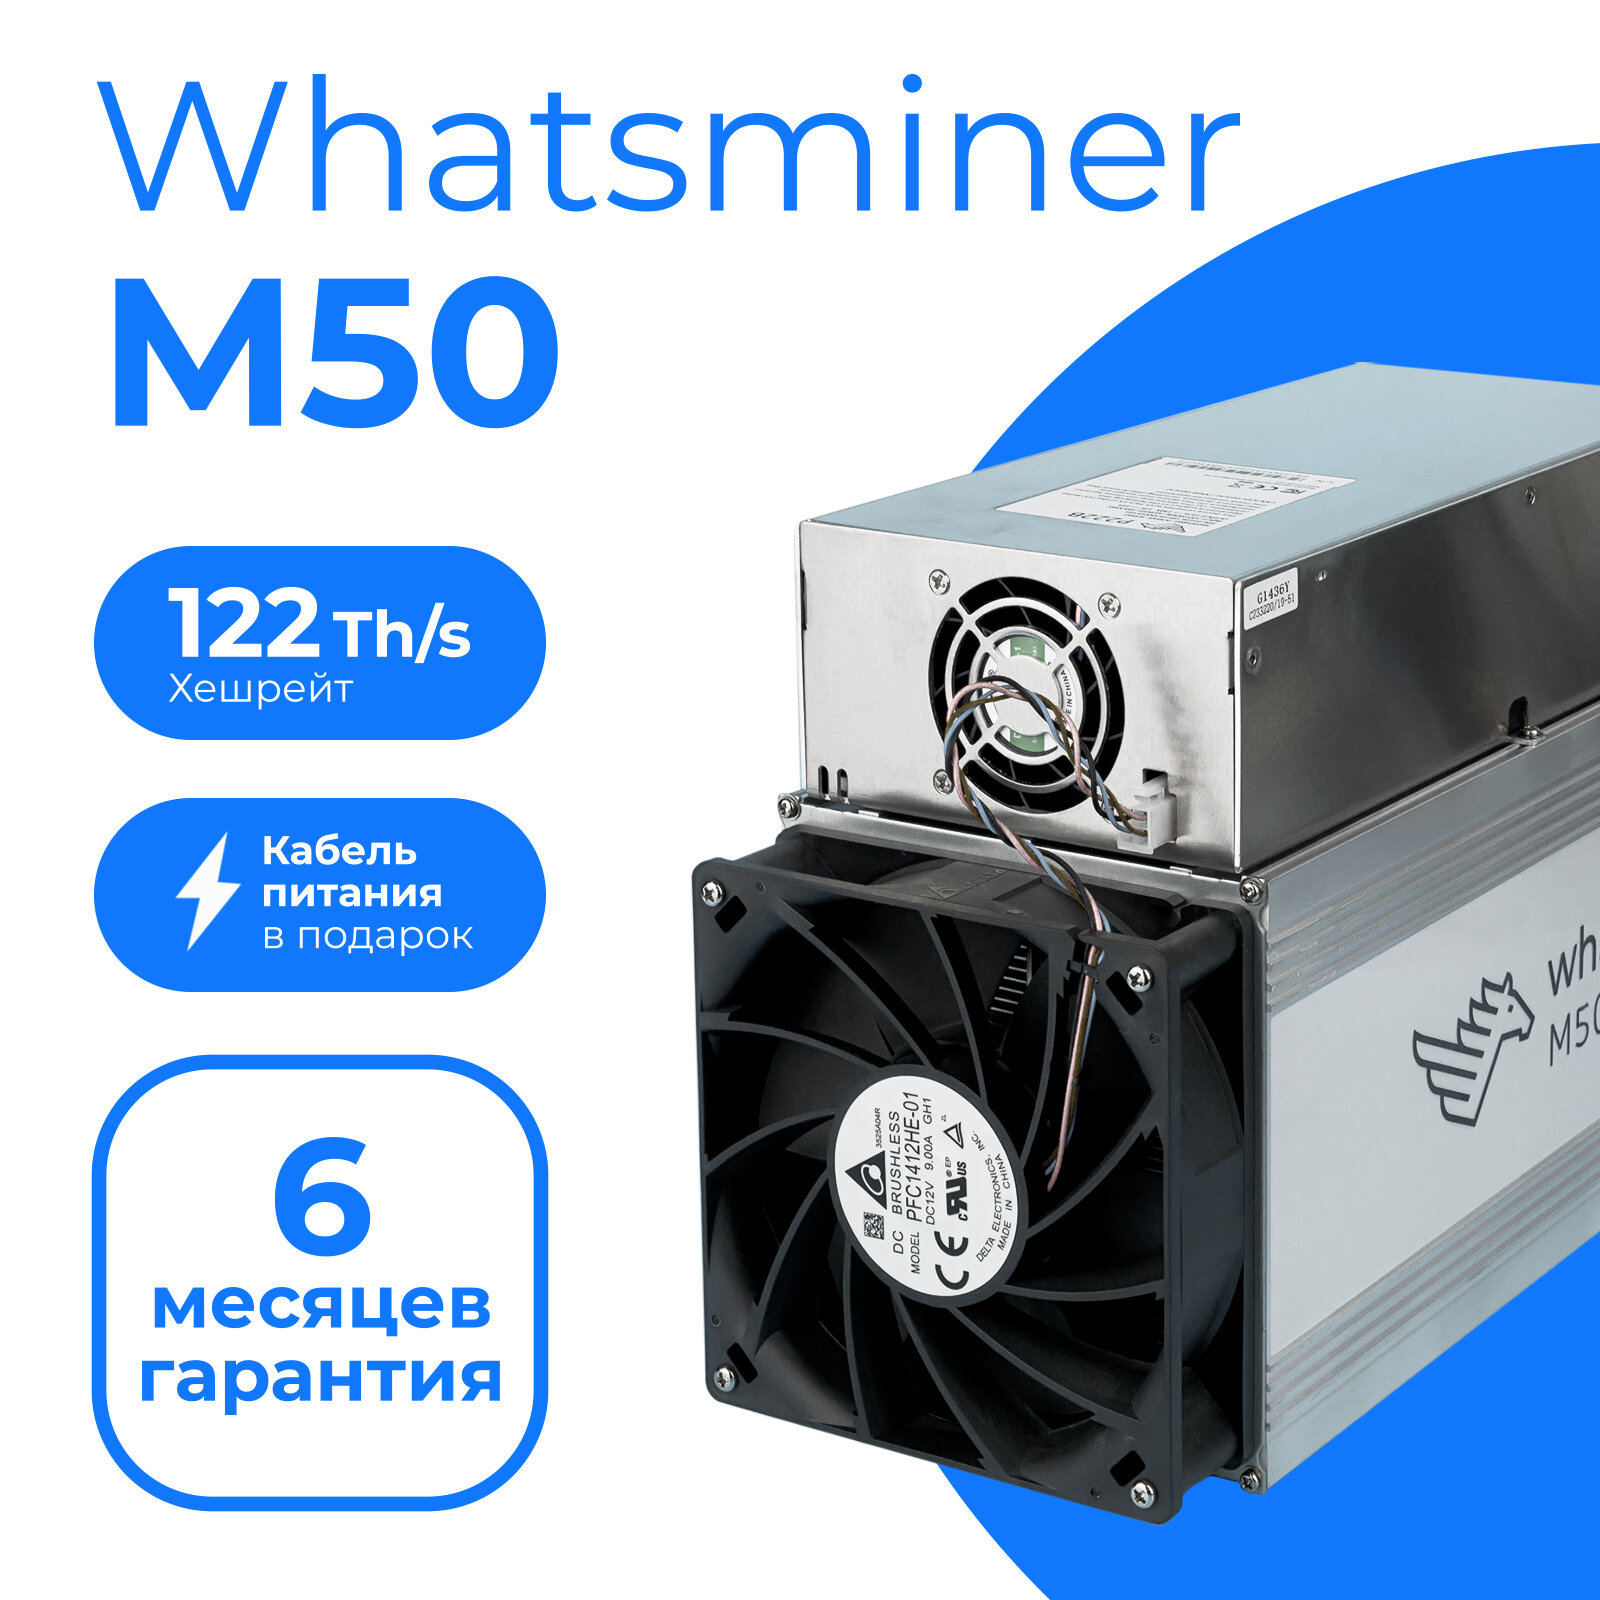 Асик майнер Whatsminer M50-122Th/s (28w) + кабель в комплекте